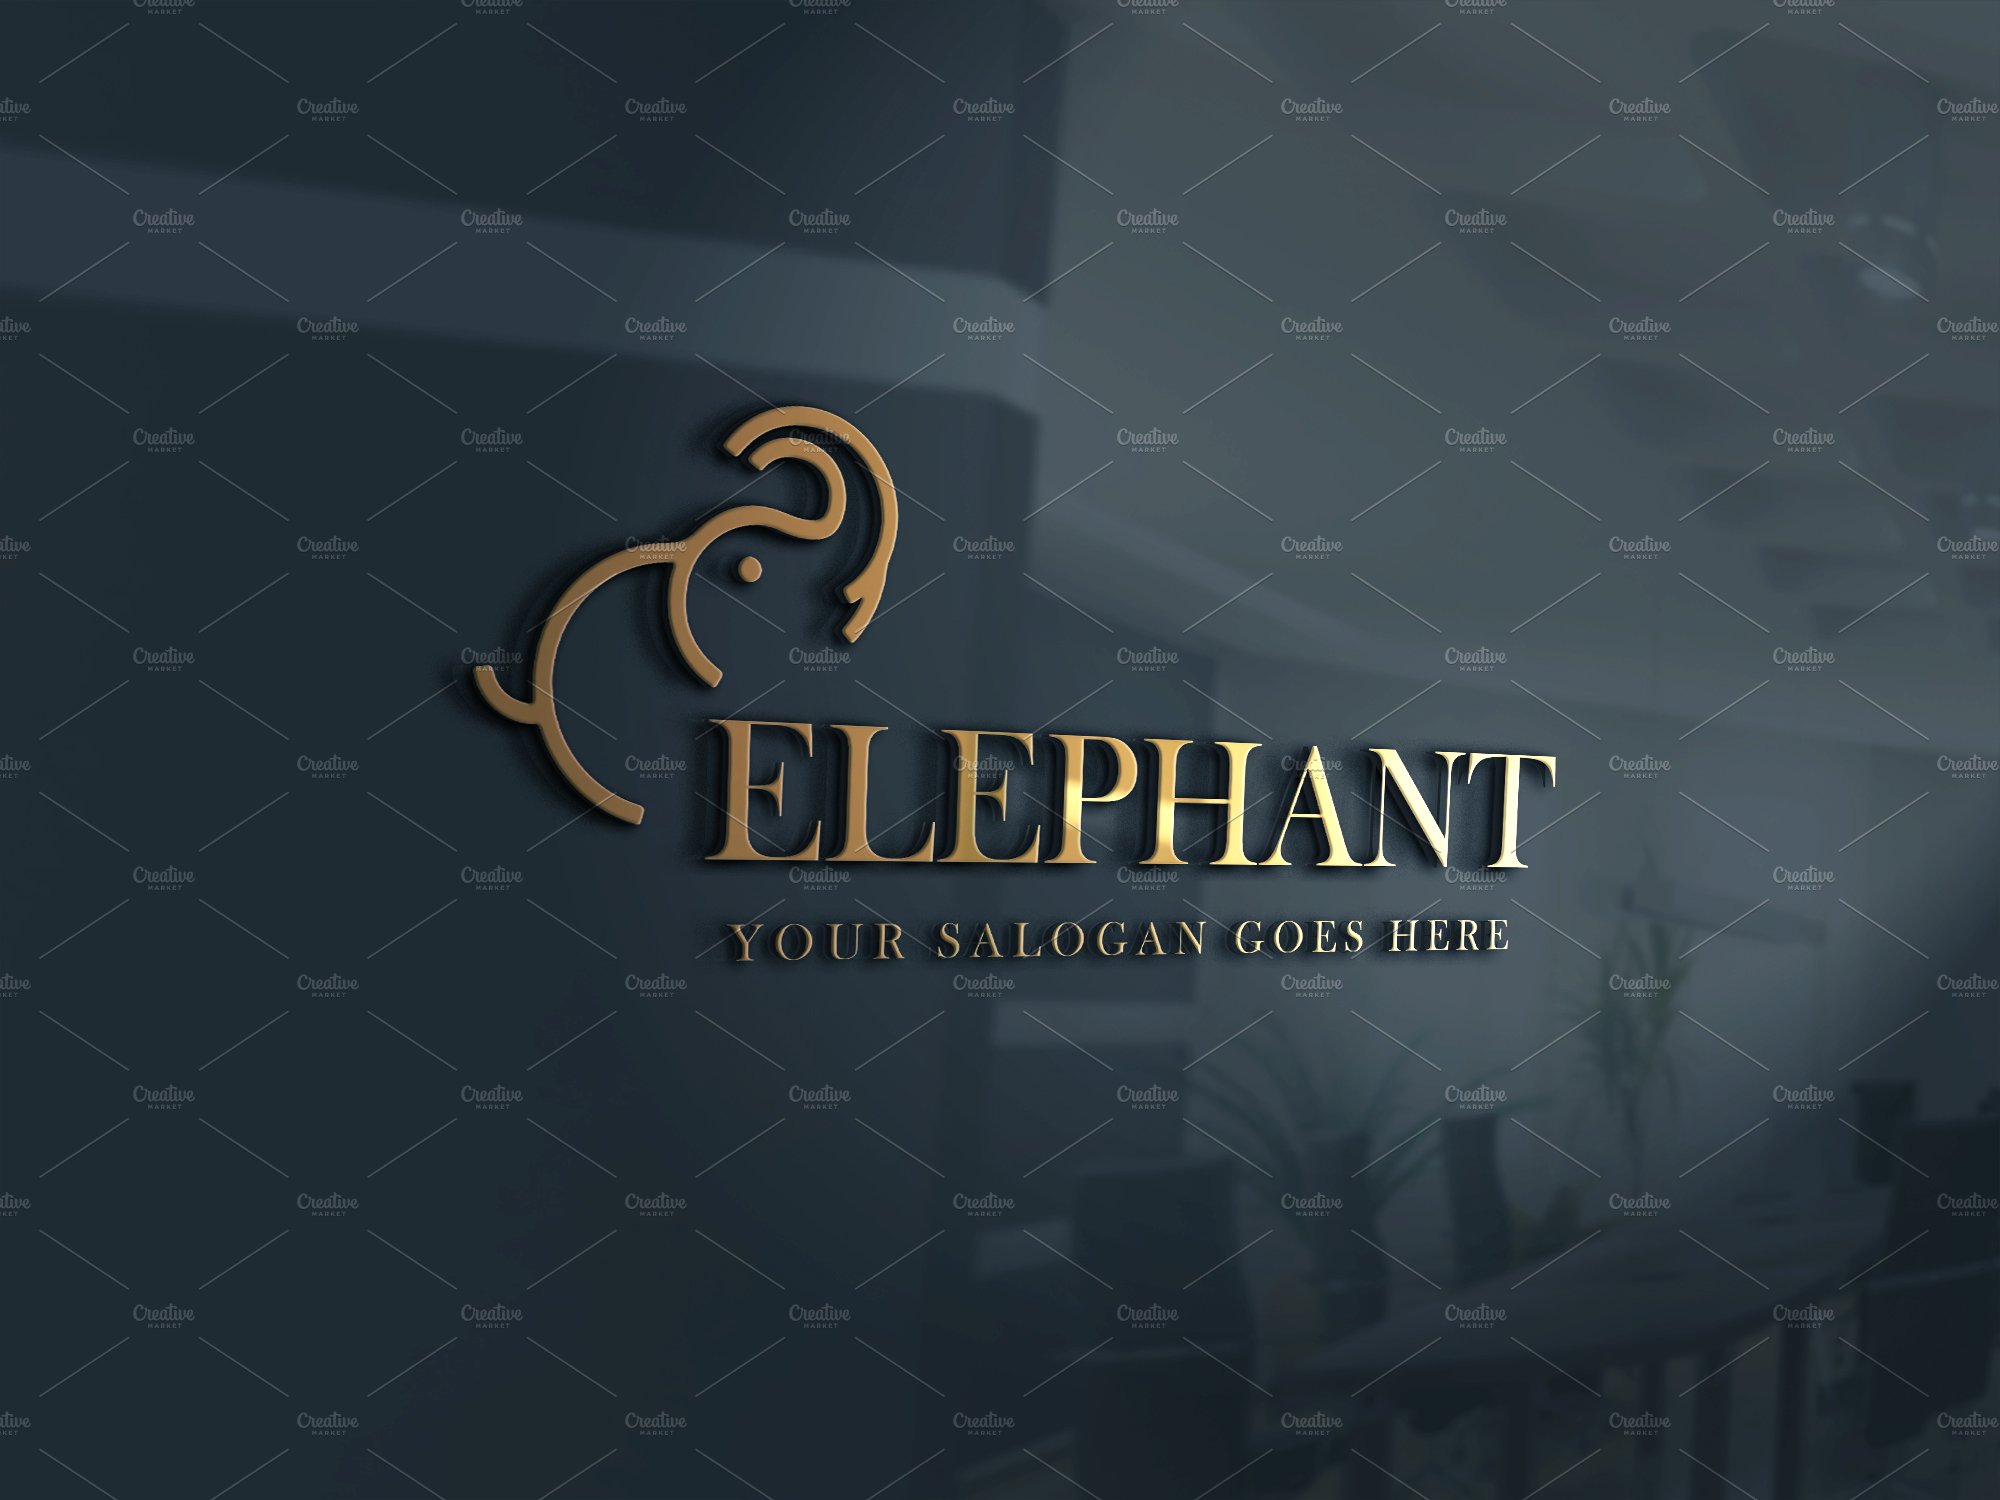 Elephant Logo 40% off preview image.